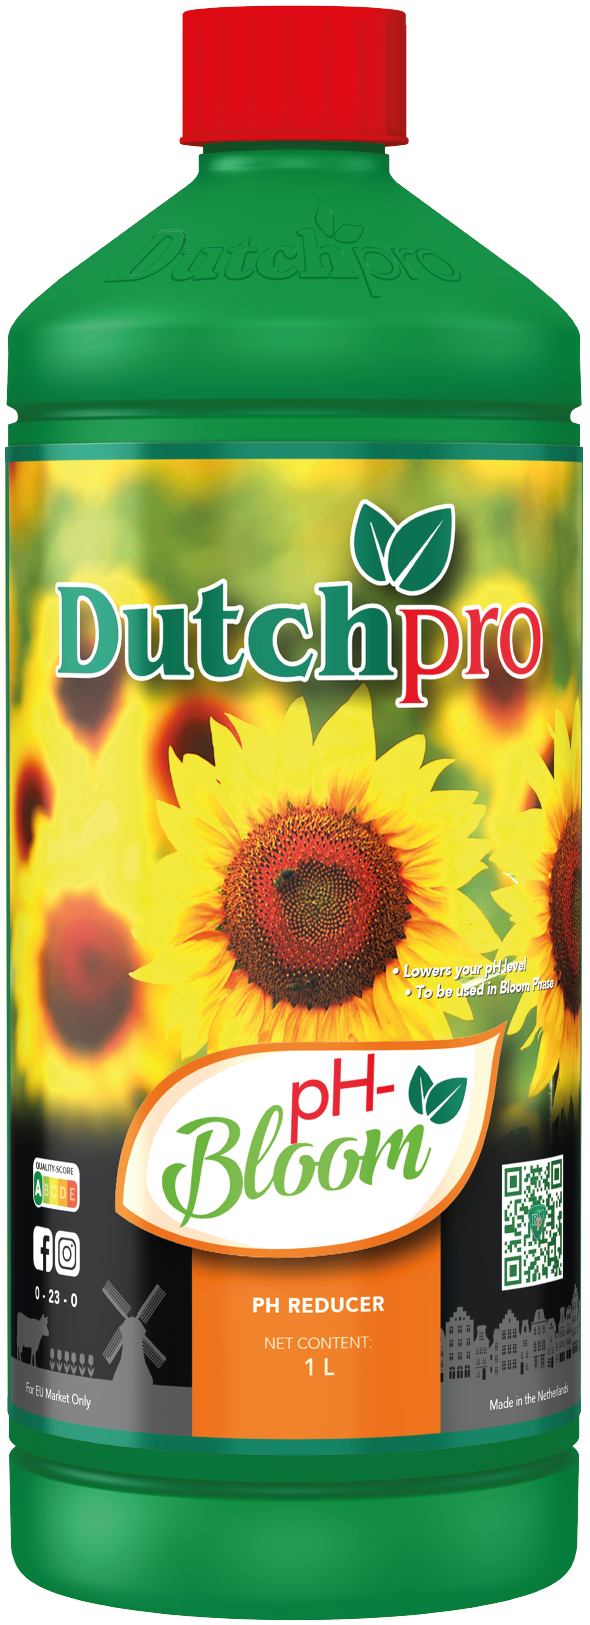 Dutchpro pH - BLOOM